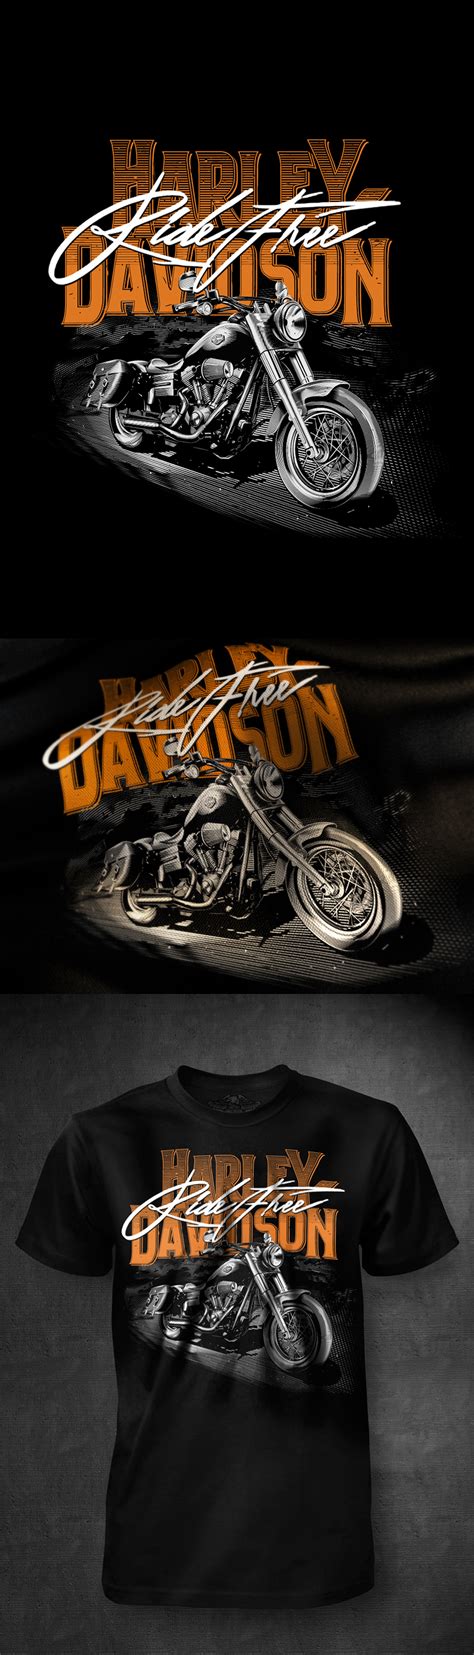 T Shirts Designs For Harley Davidson On Behance